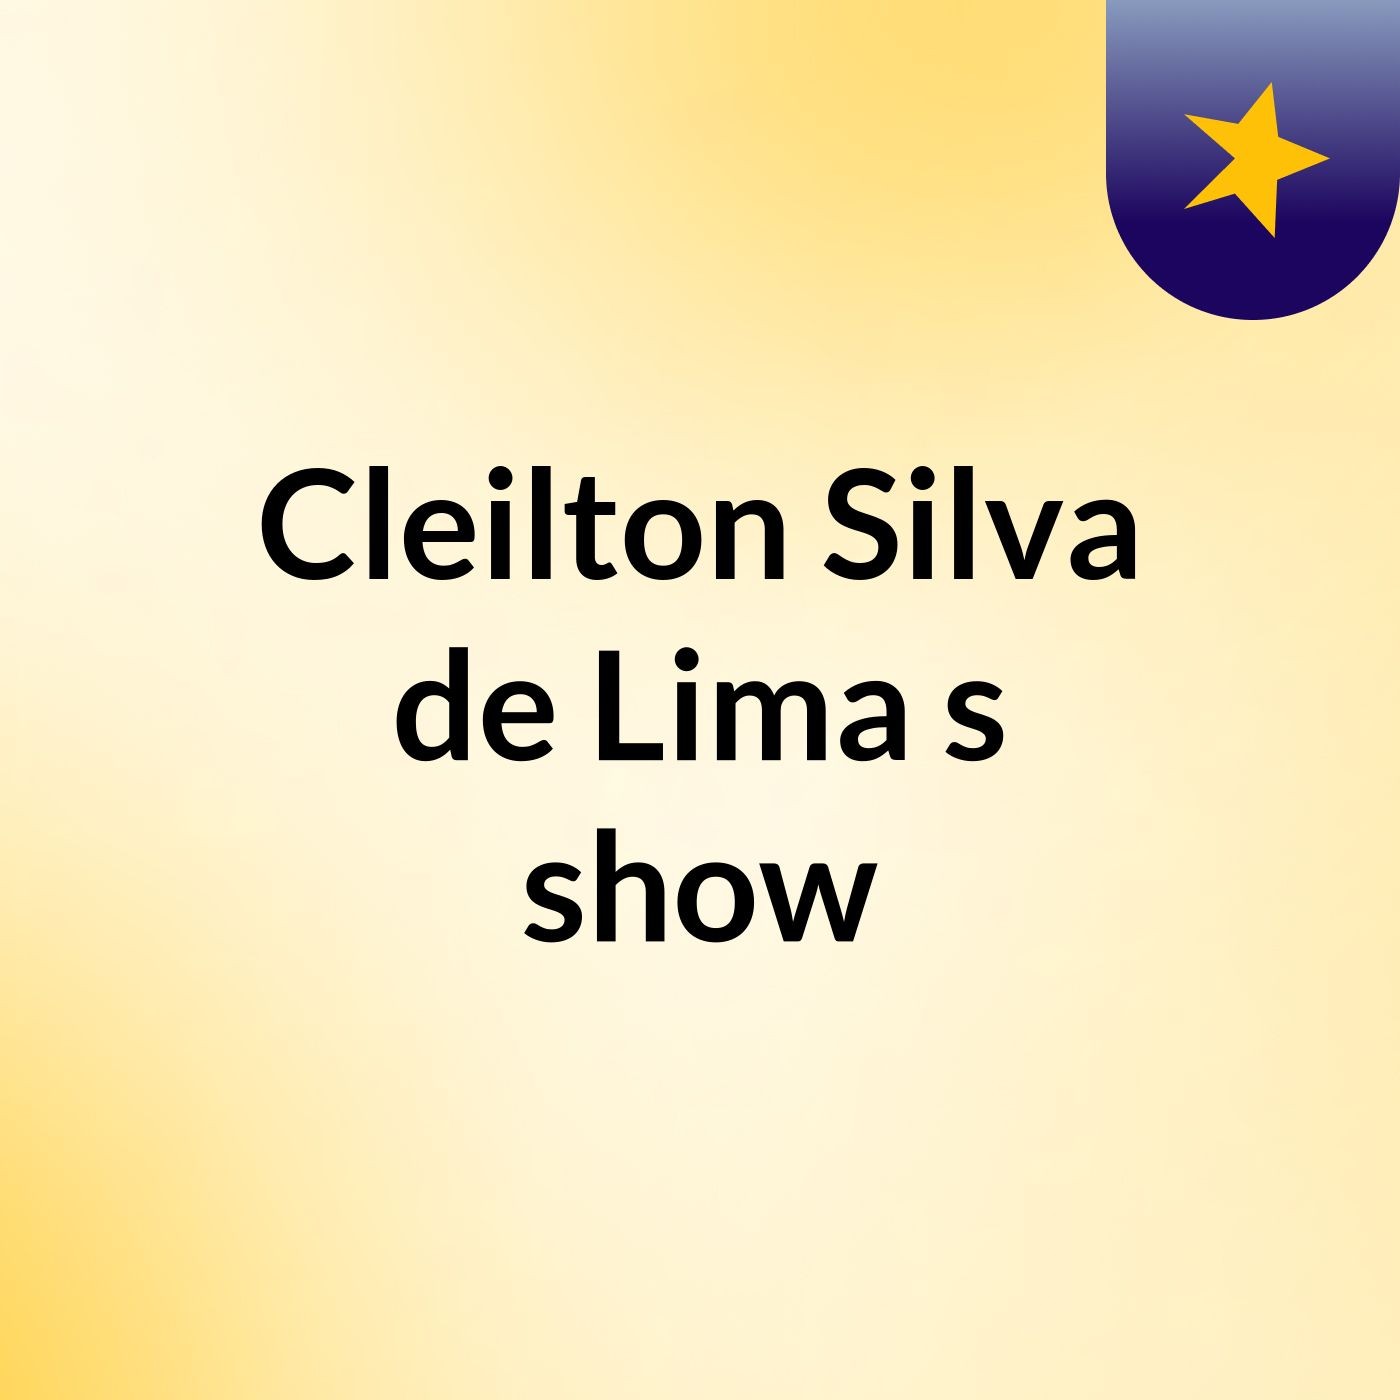 Cleilton Silva de Lima's show